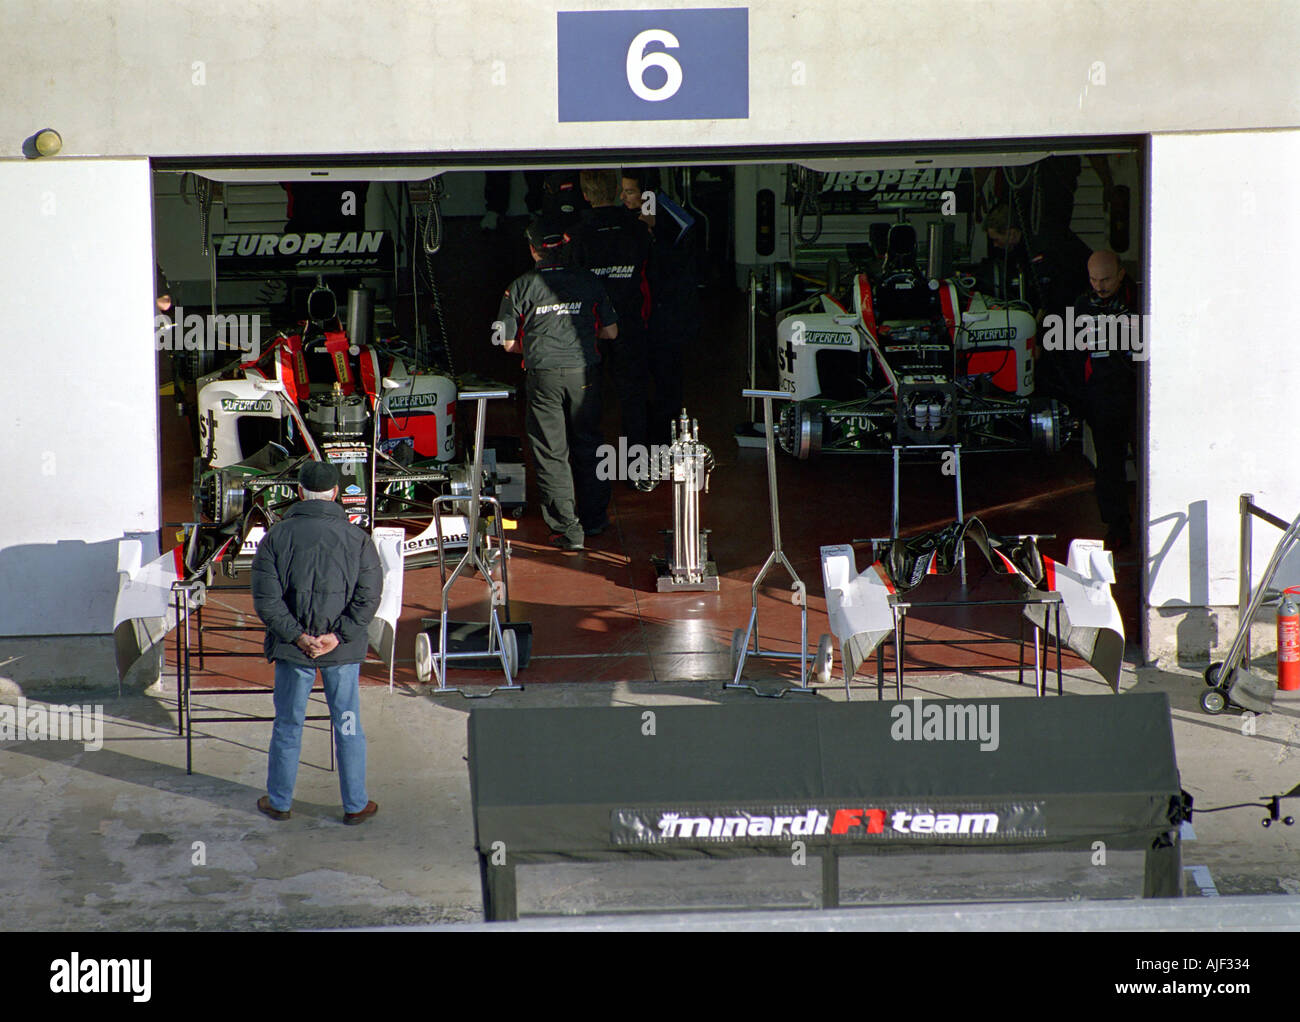 Minardi testing in Vallelunga racetrack, near Rome, Italy Stock Photo